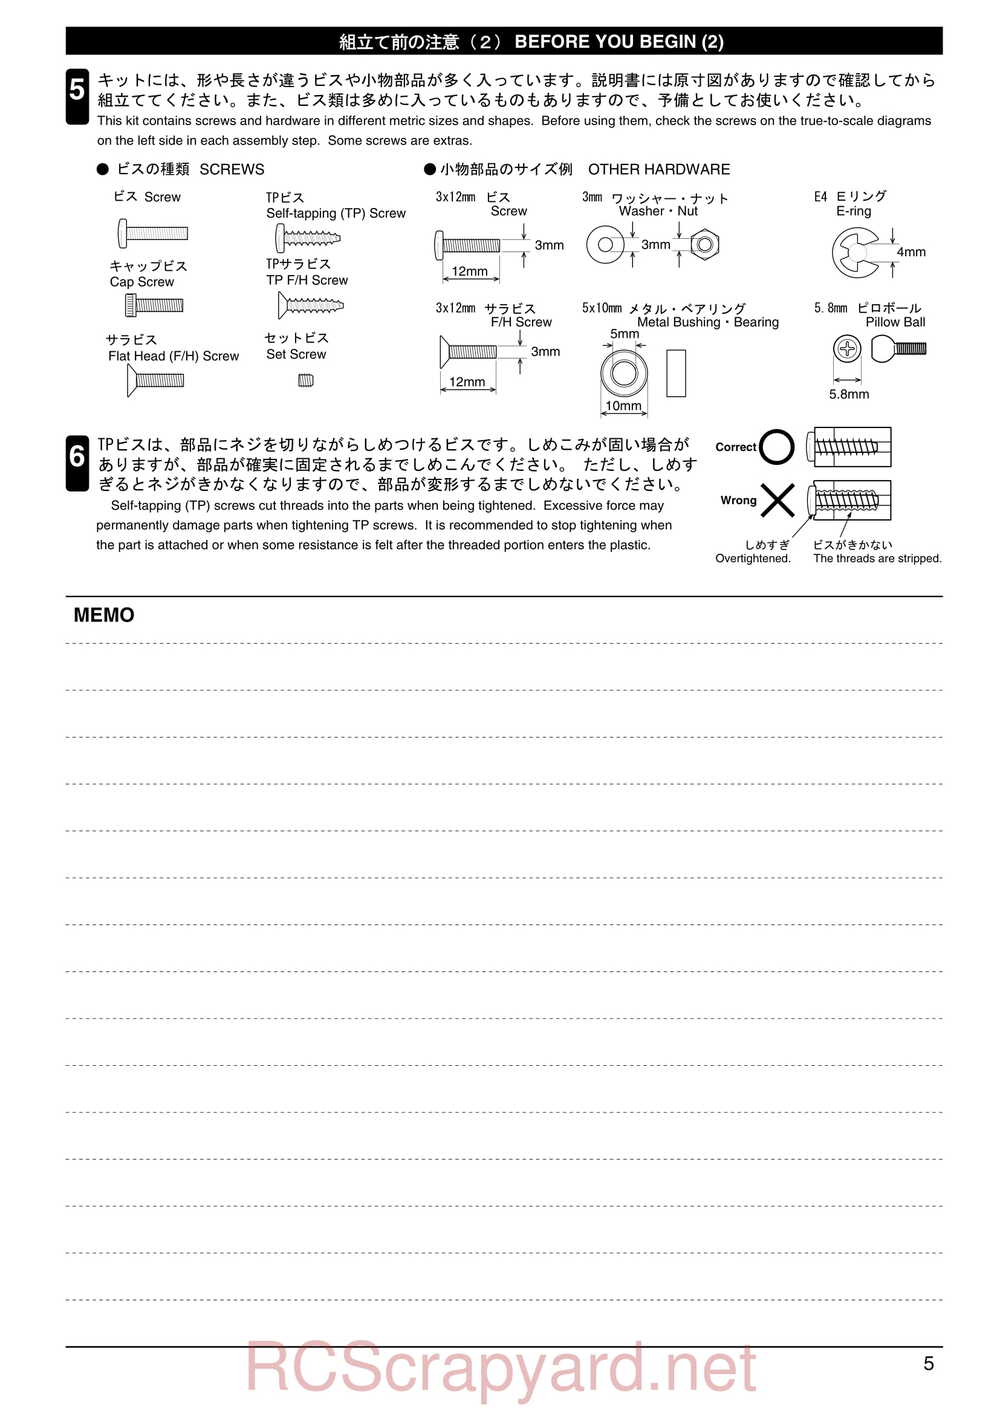 Kyosho - 30101 - KX-One - Manual - Page 05